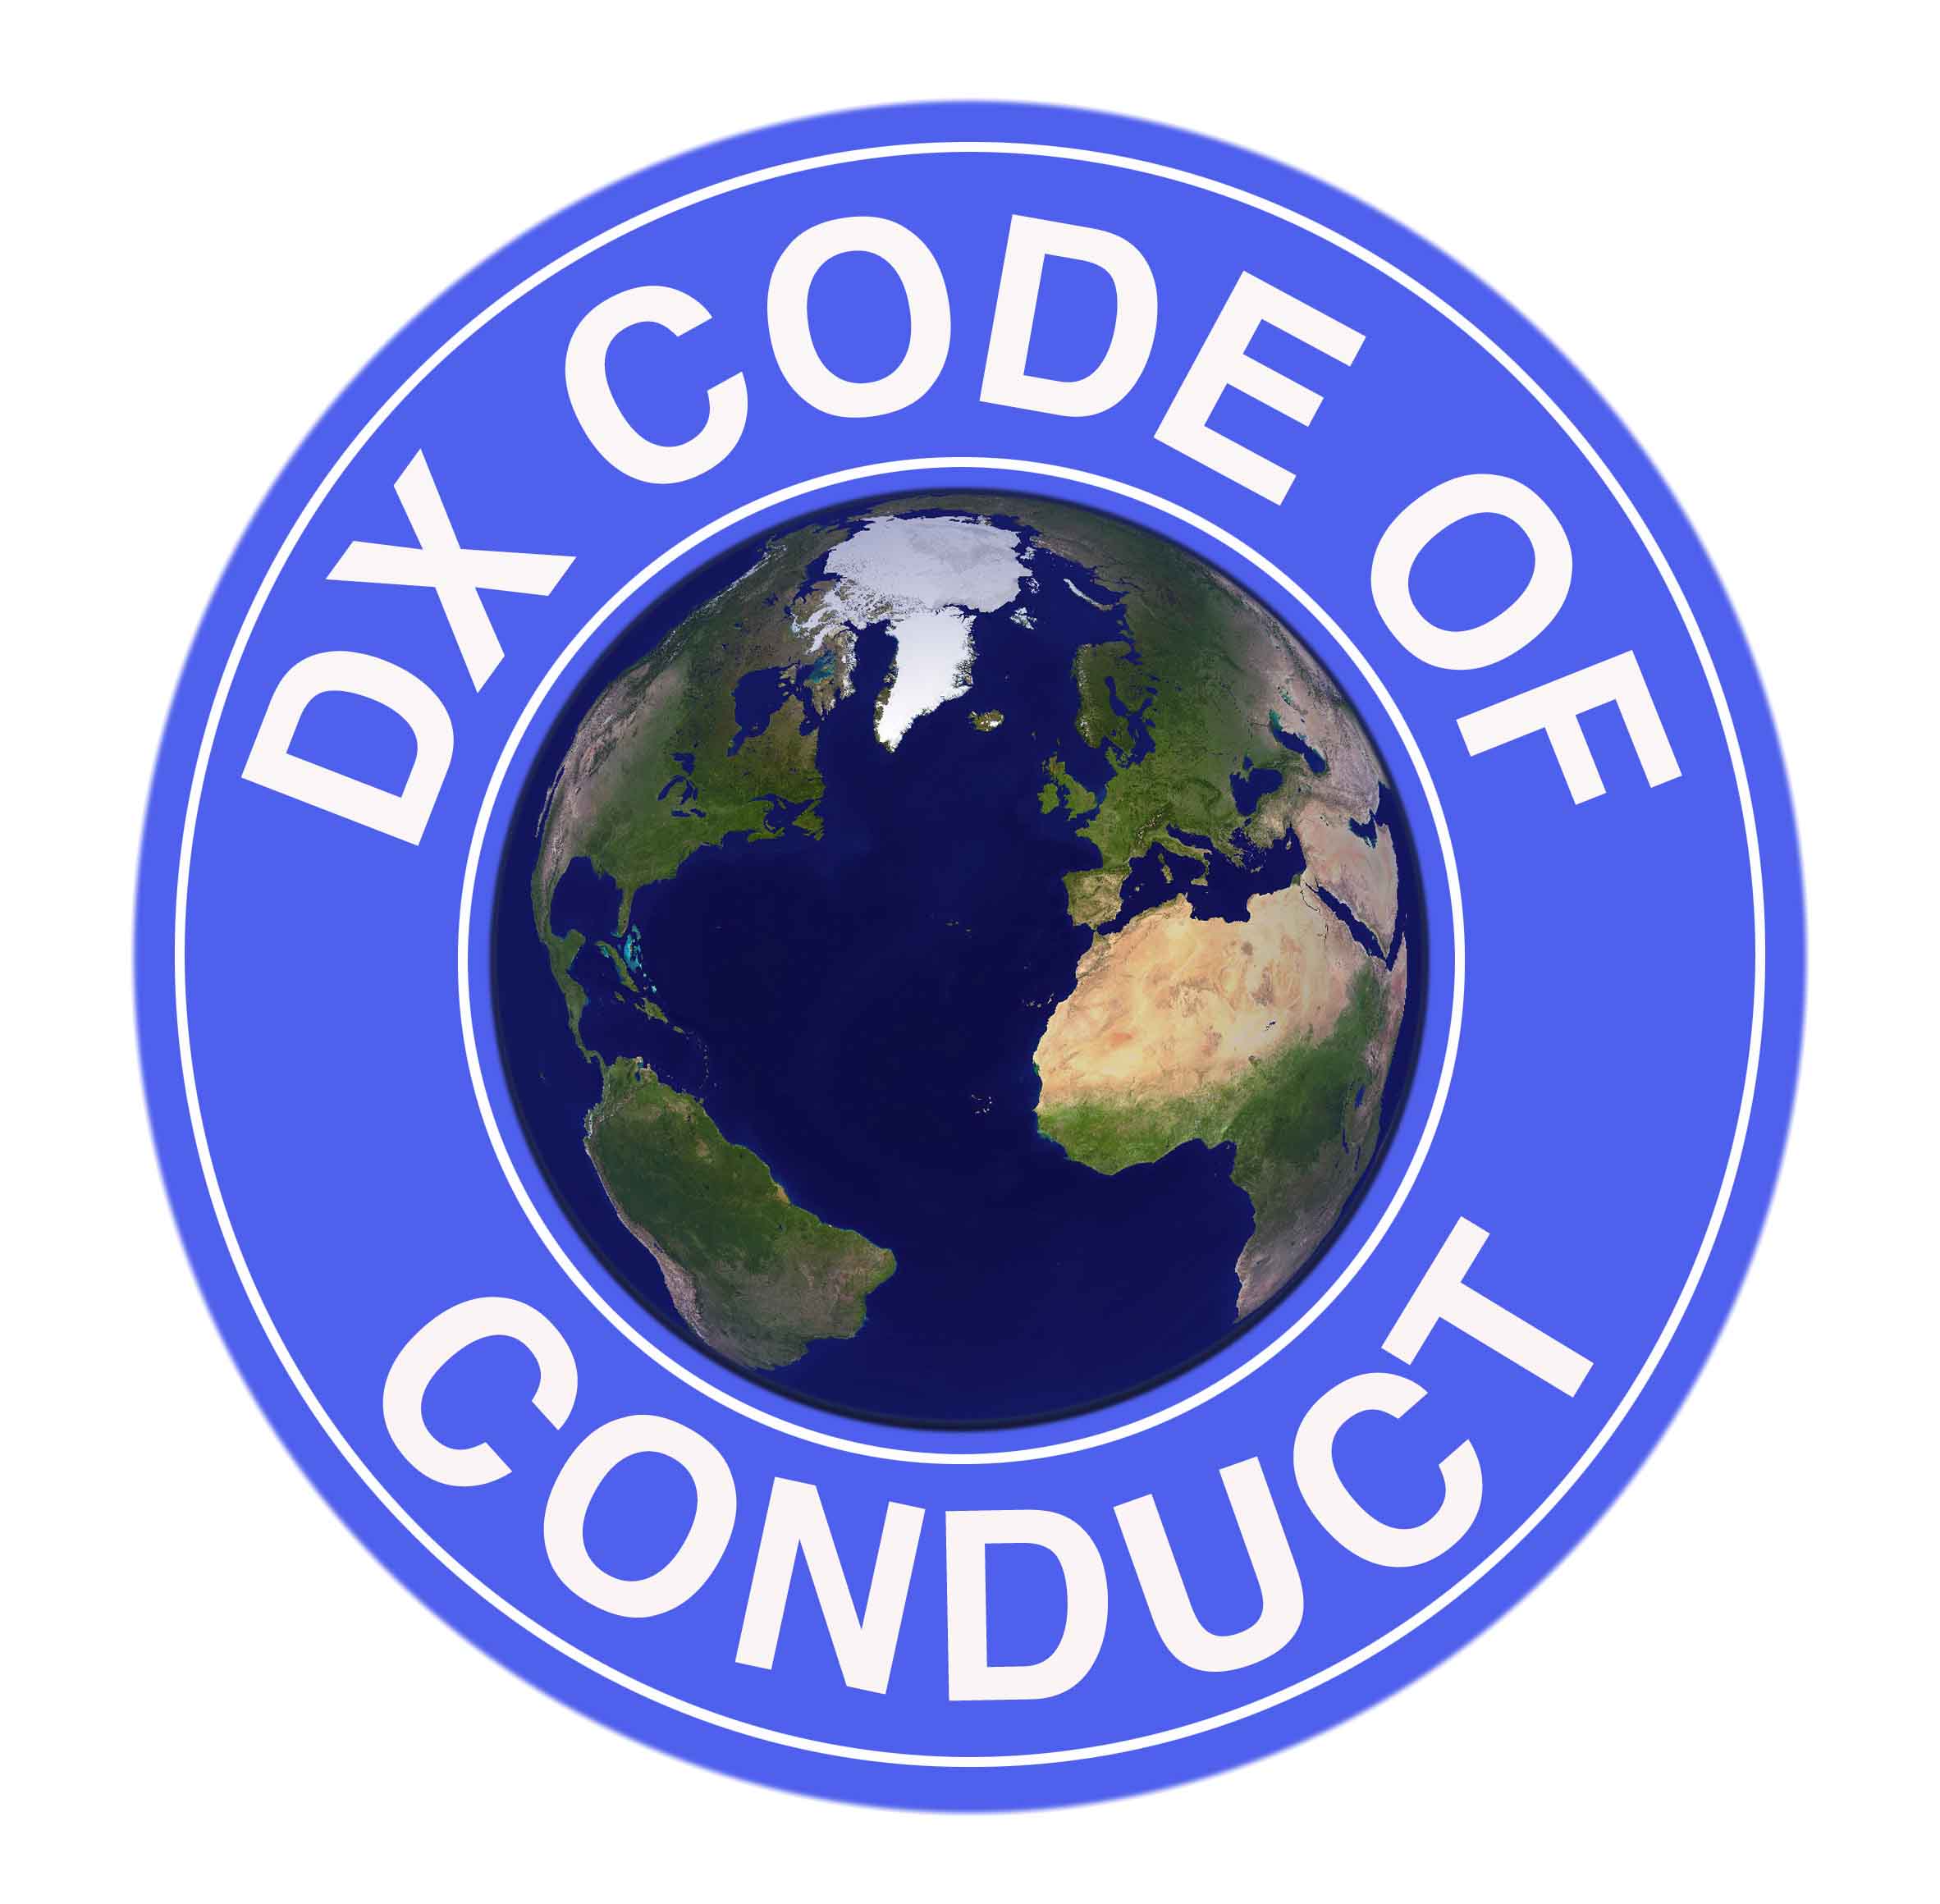 Ham Radio “Code of Conduct”